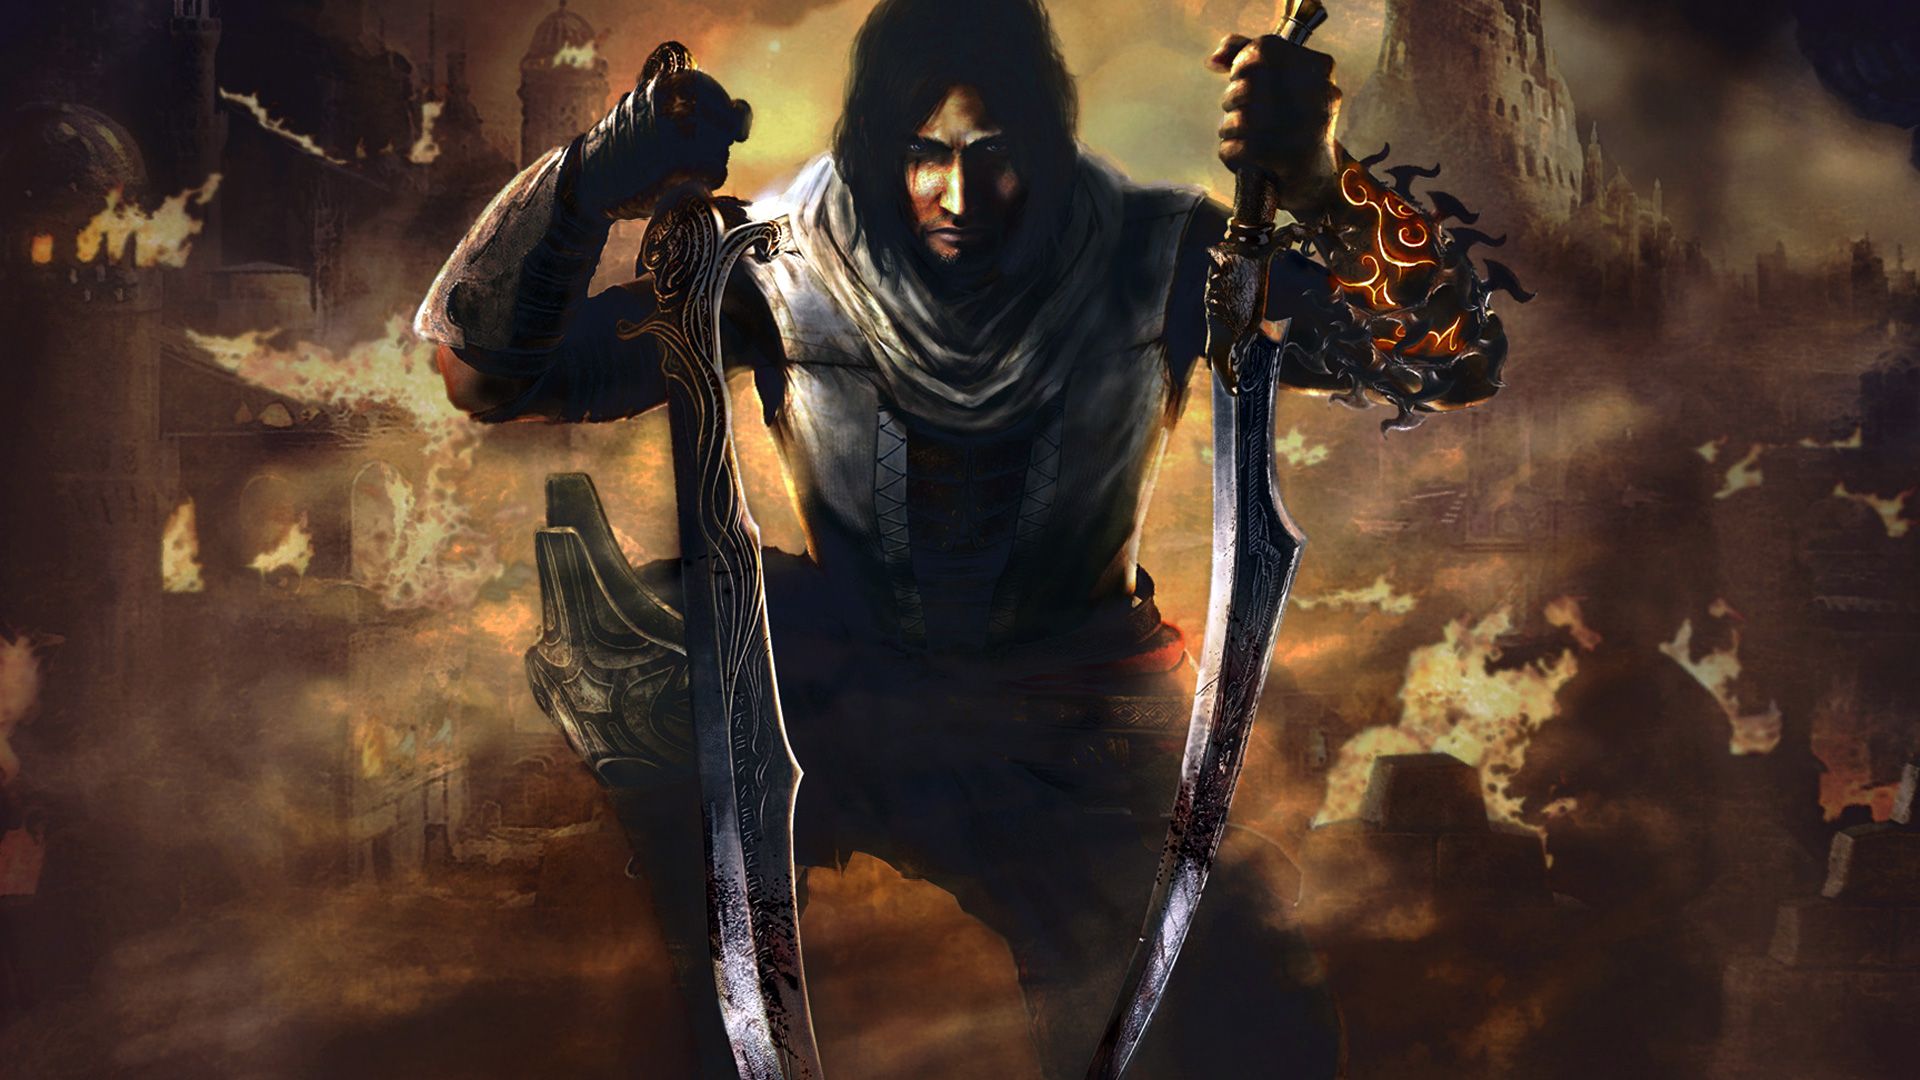 Prince of Persia Anime Image Board